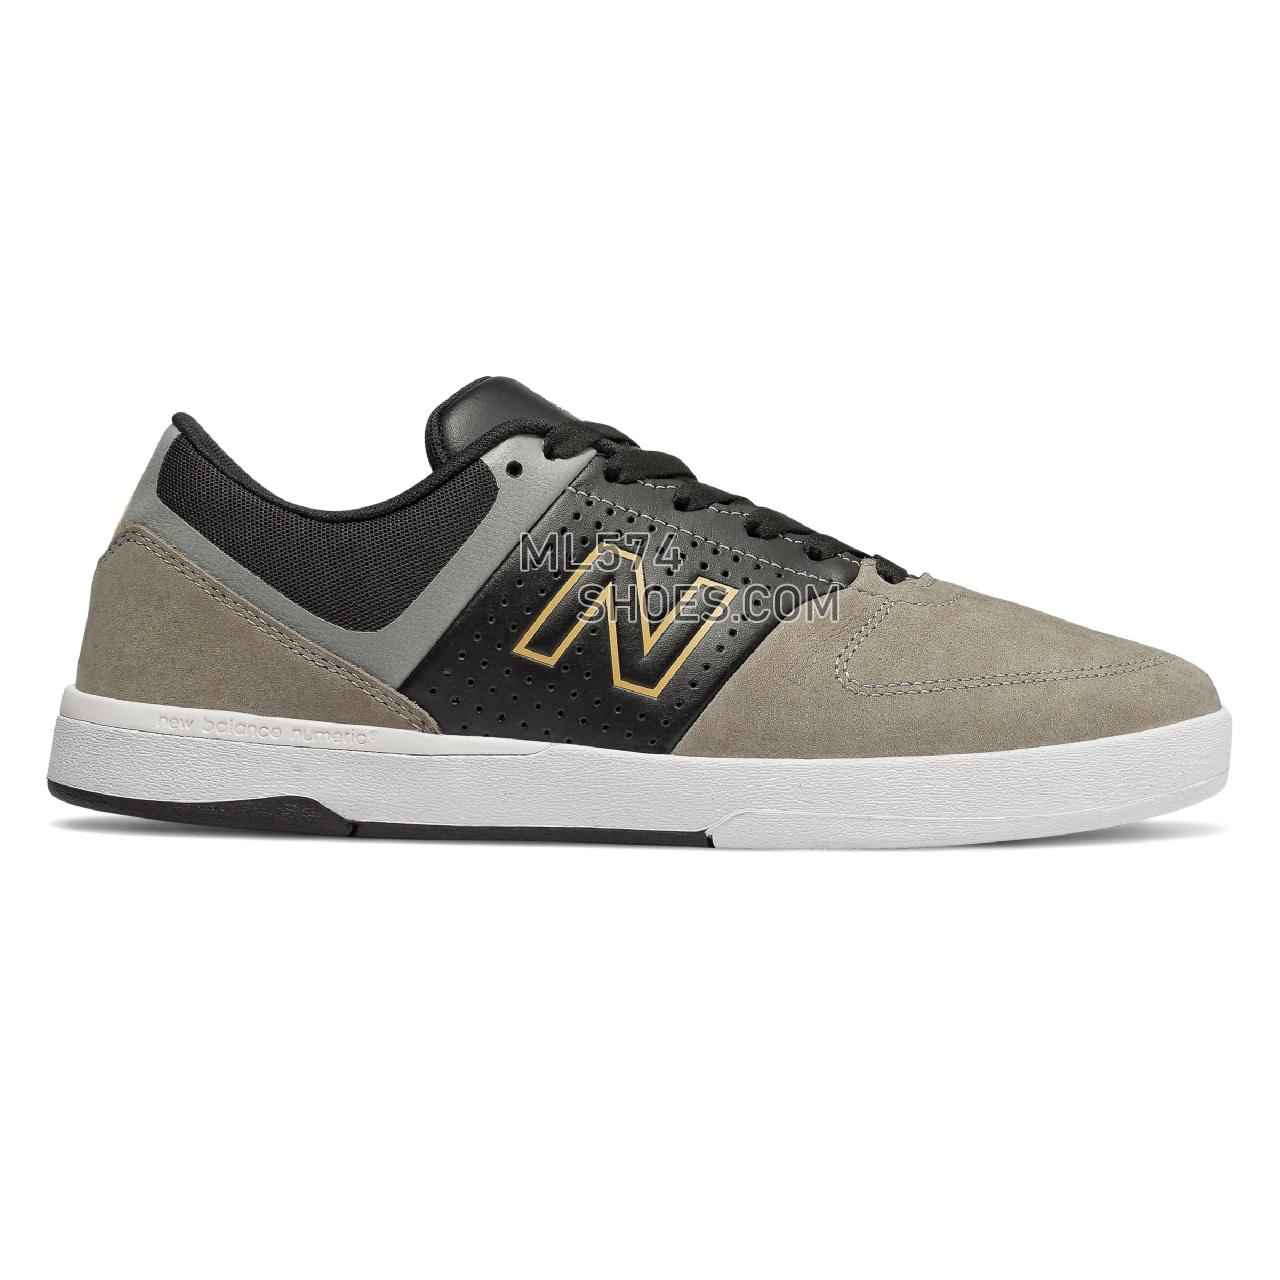 New Balance Numeric 533 - Men's NB Numeric Skate - Black with Grey - NM533BZ2